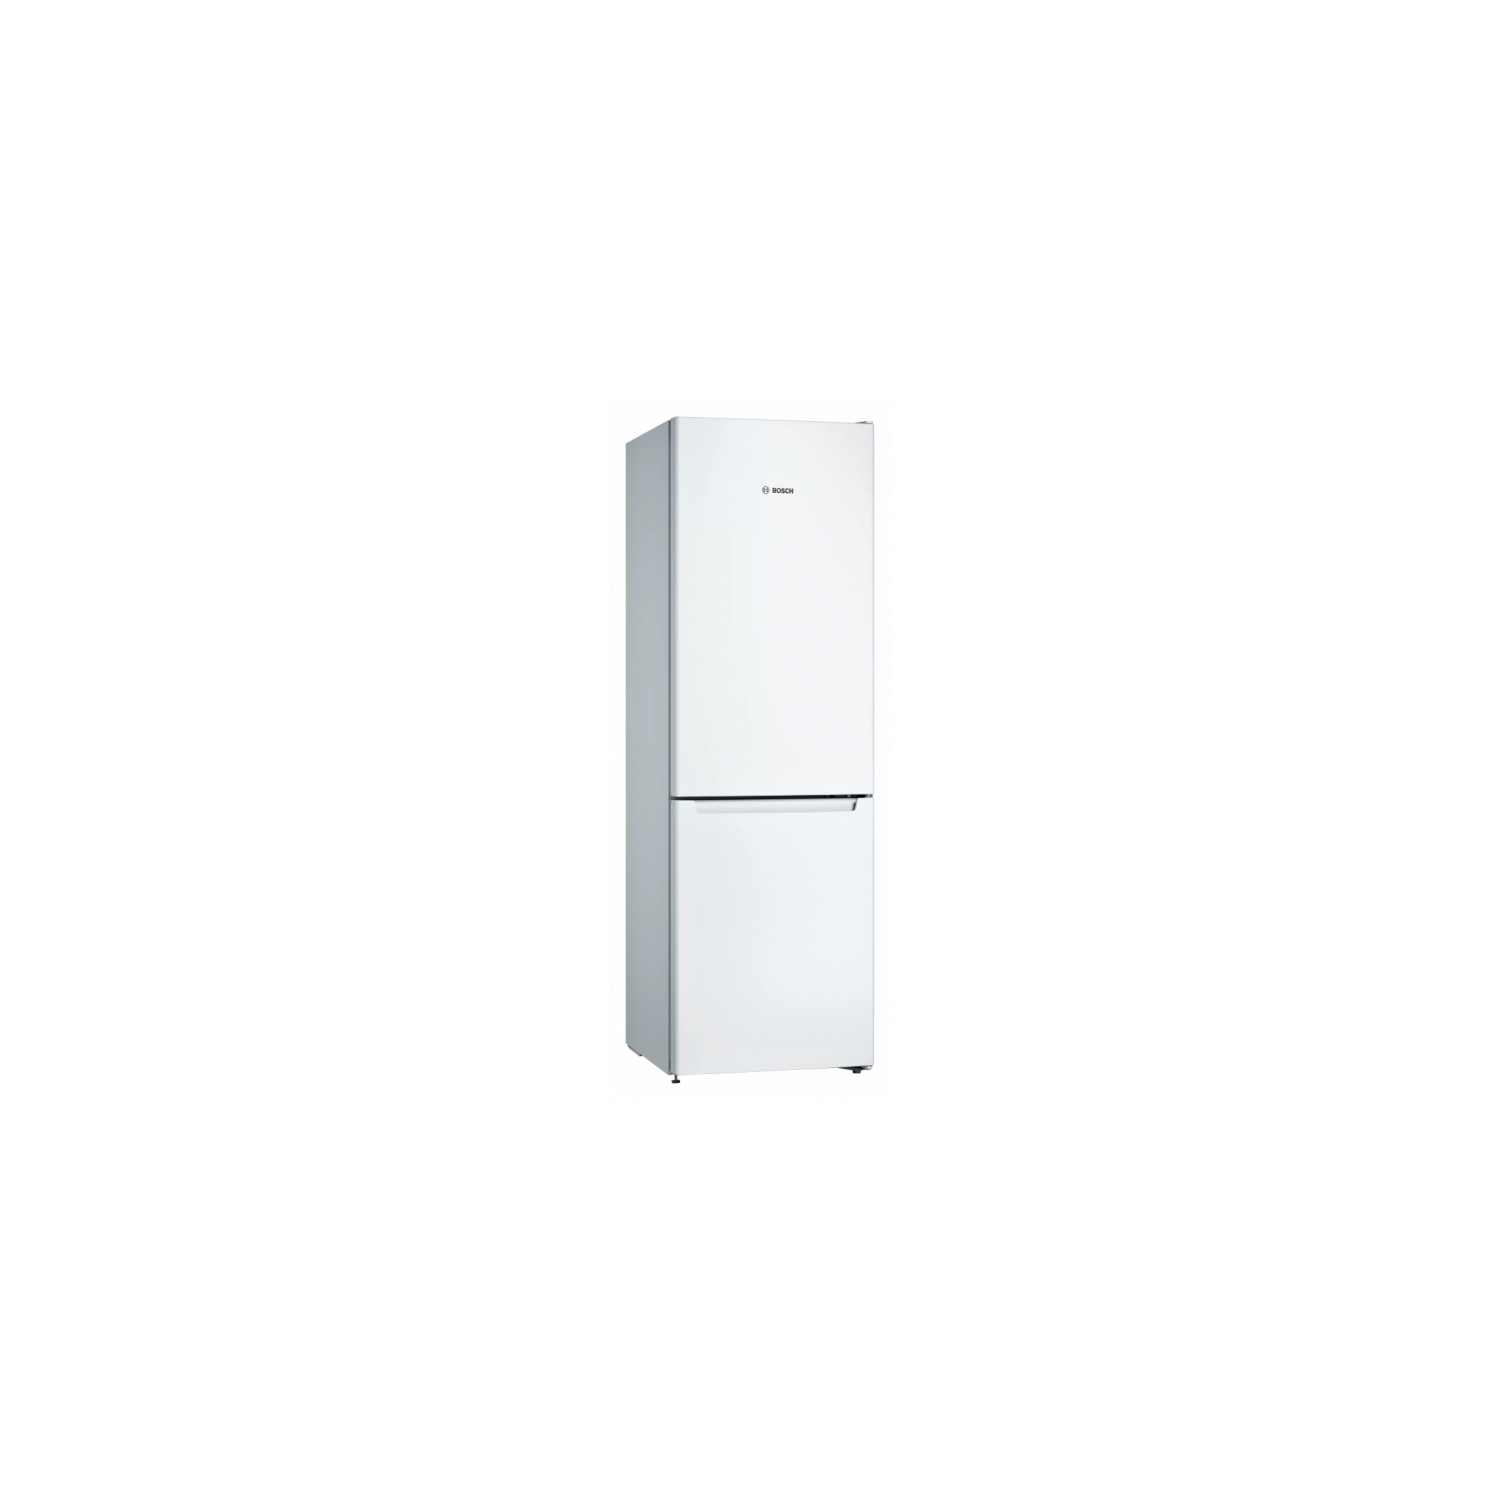 Bosch 186cm tall fridge freezer - 1